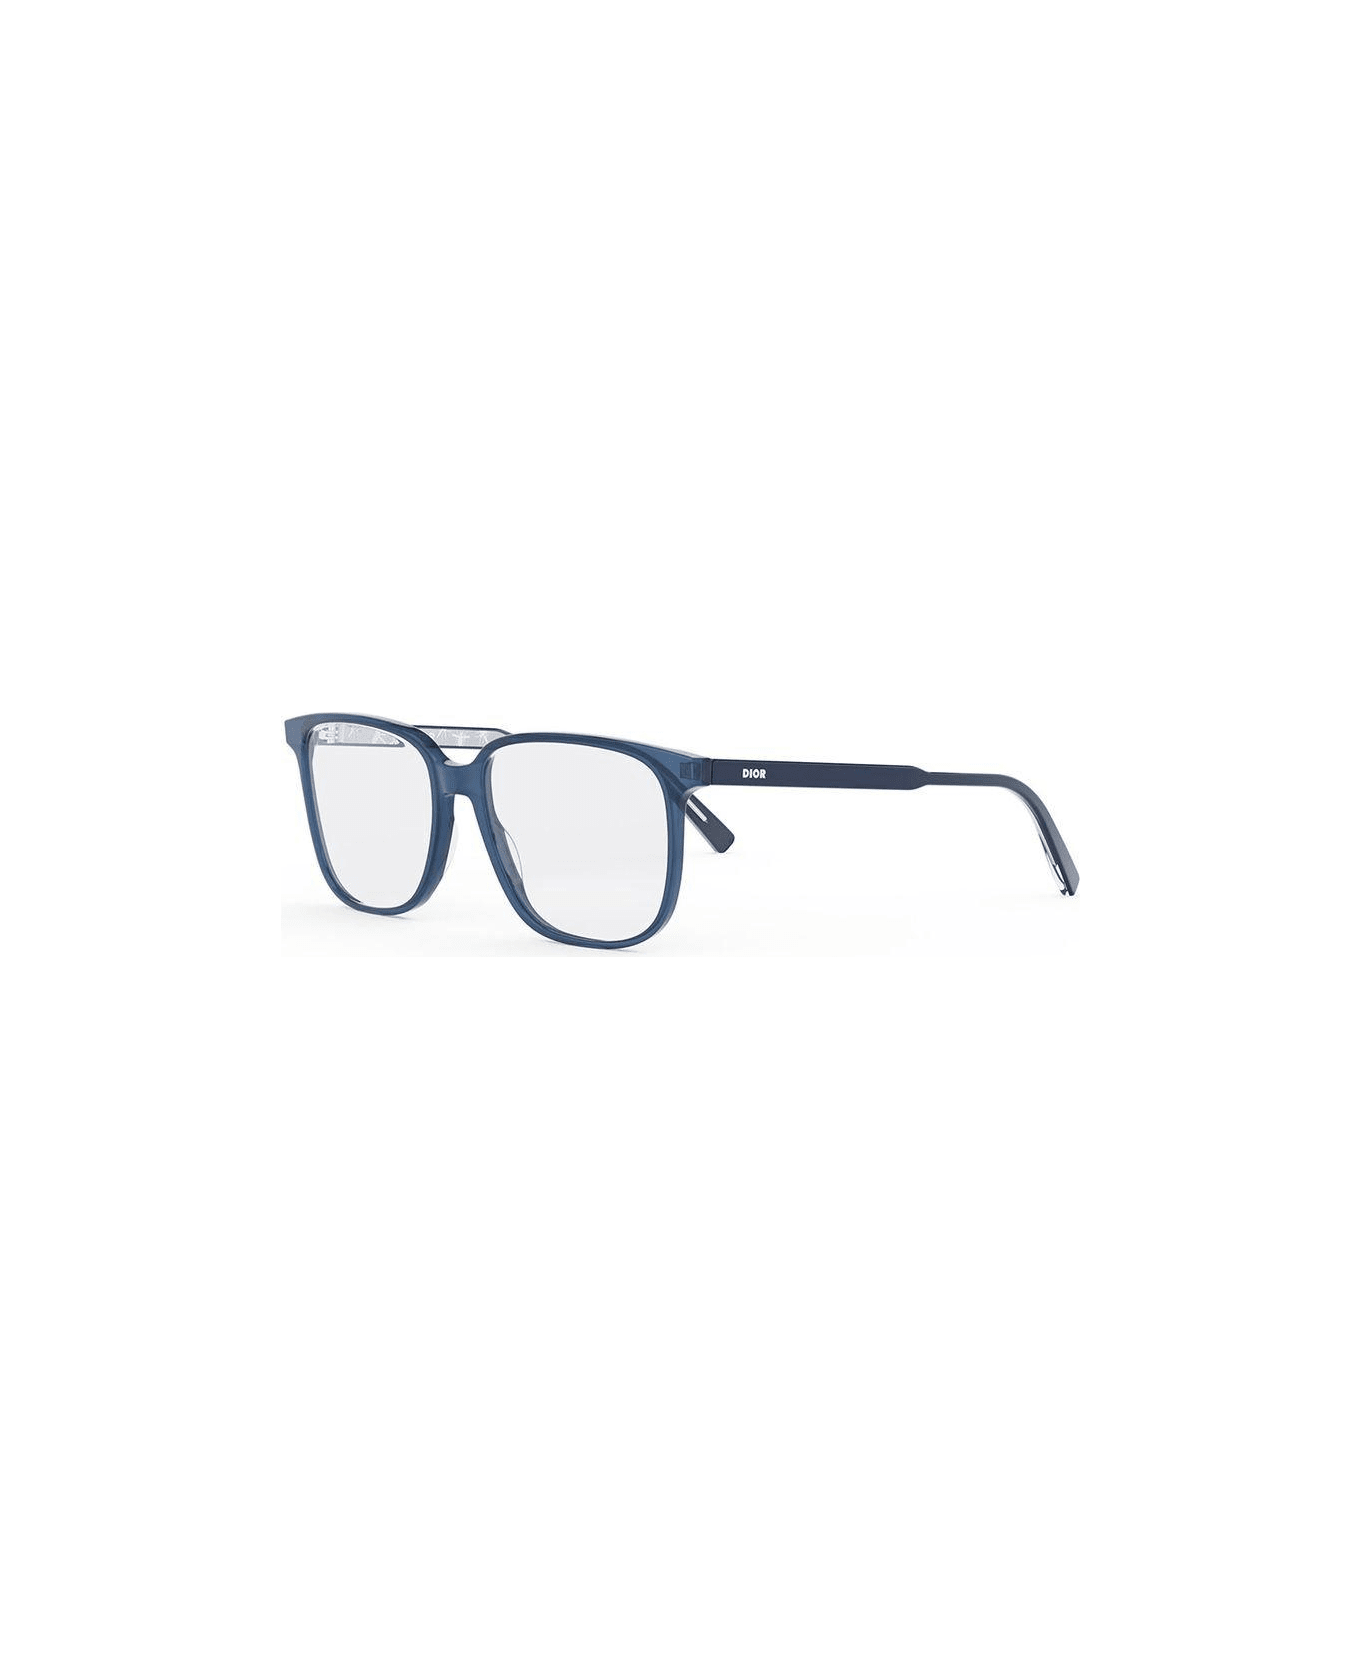 Dior Eyewear Square Frame Glasses - 3000